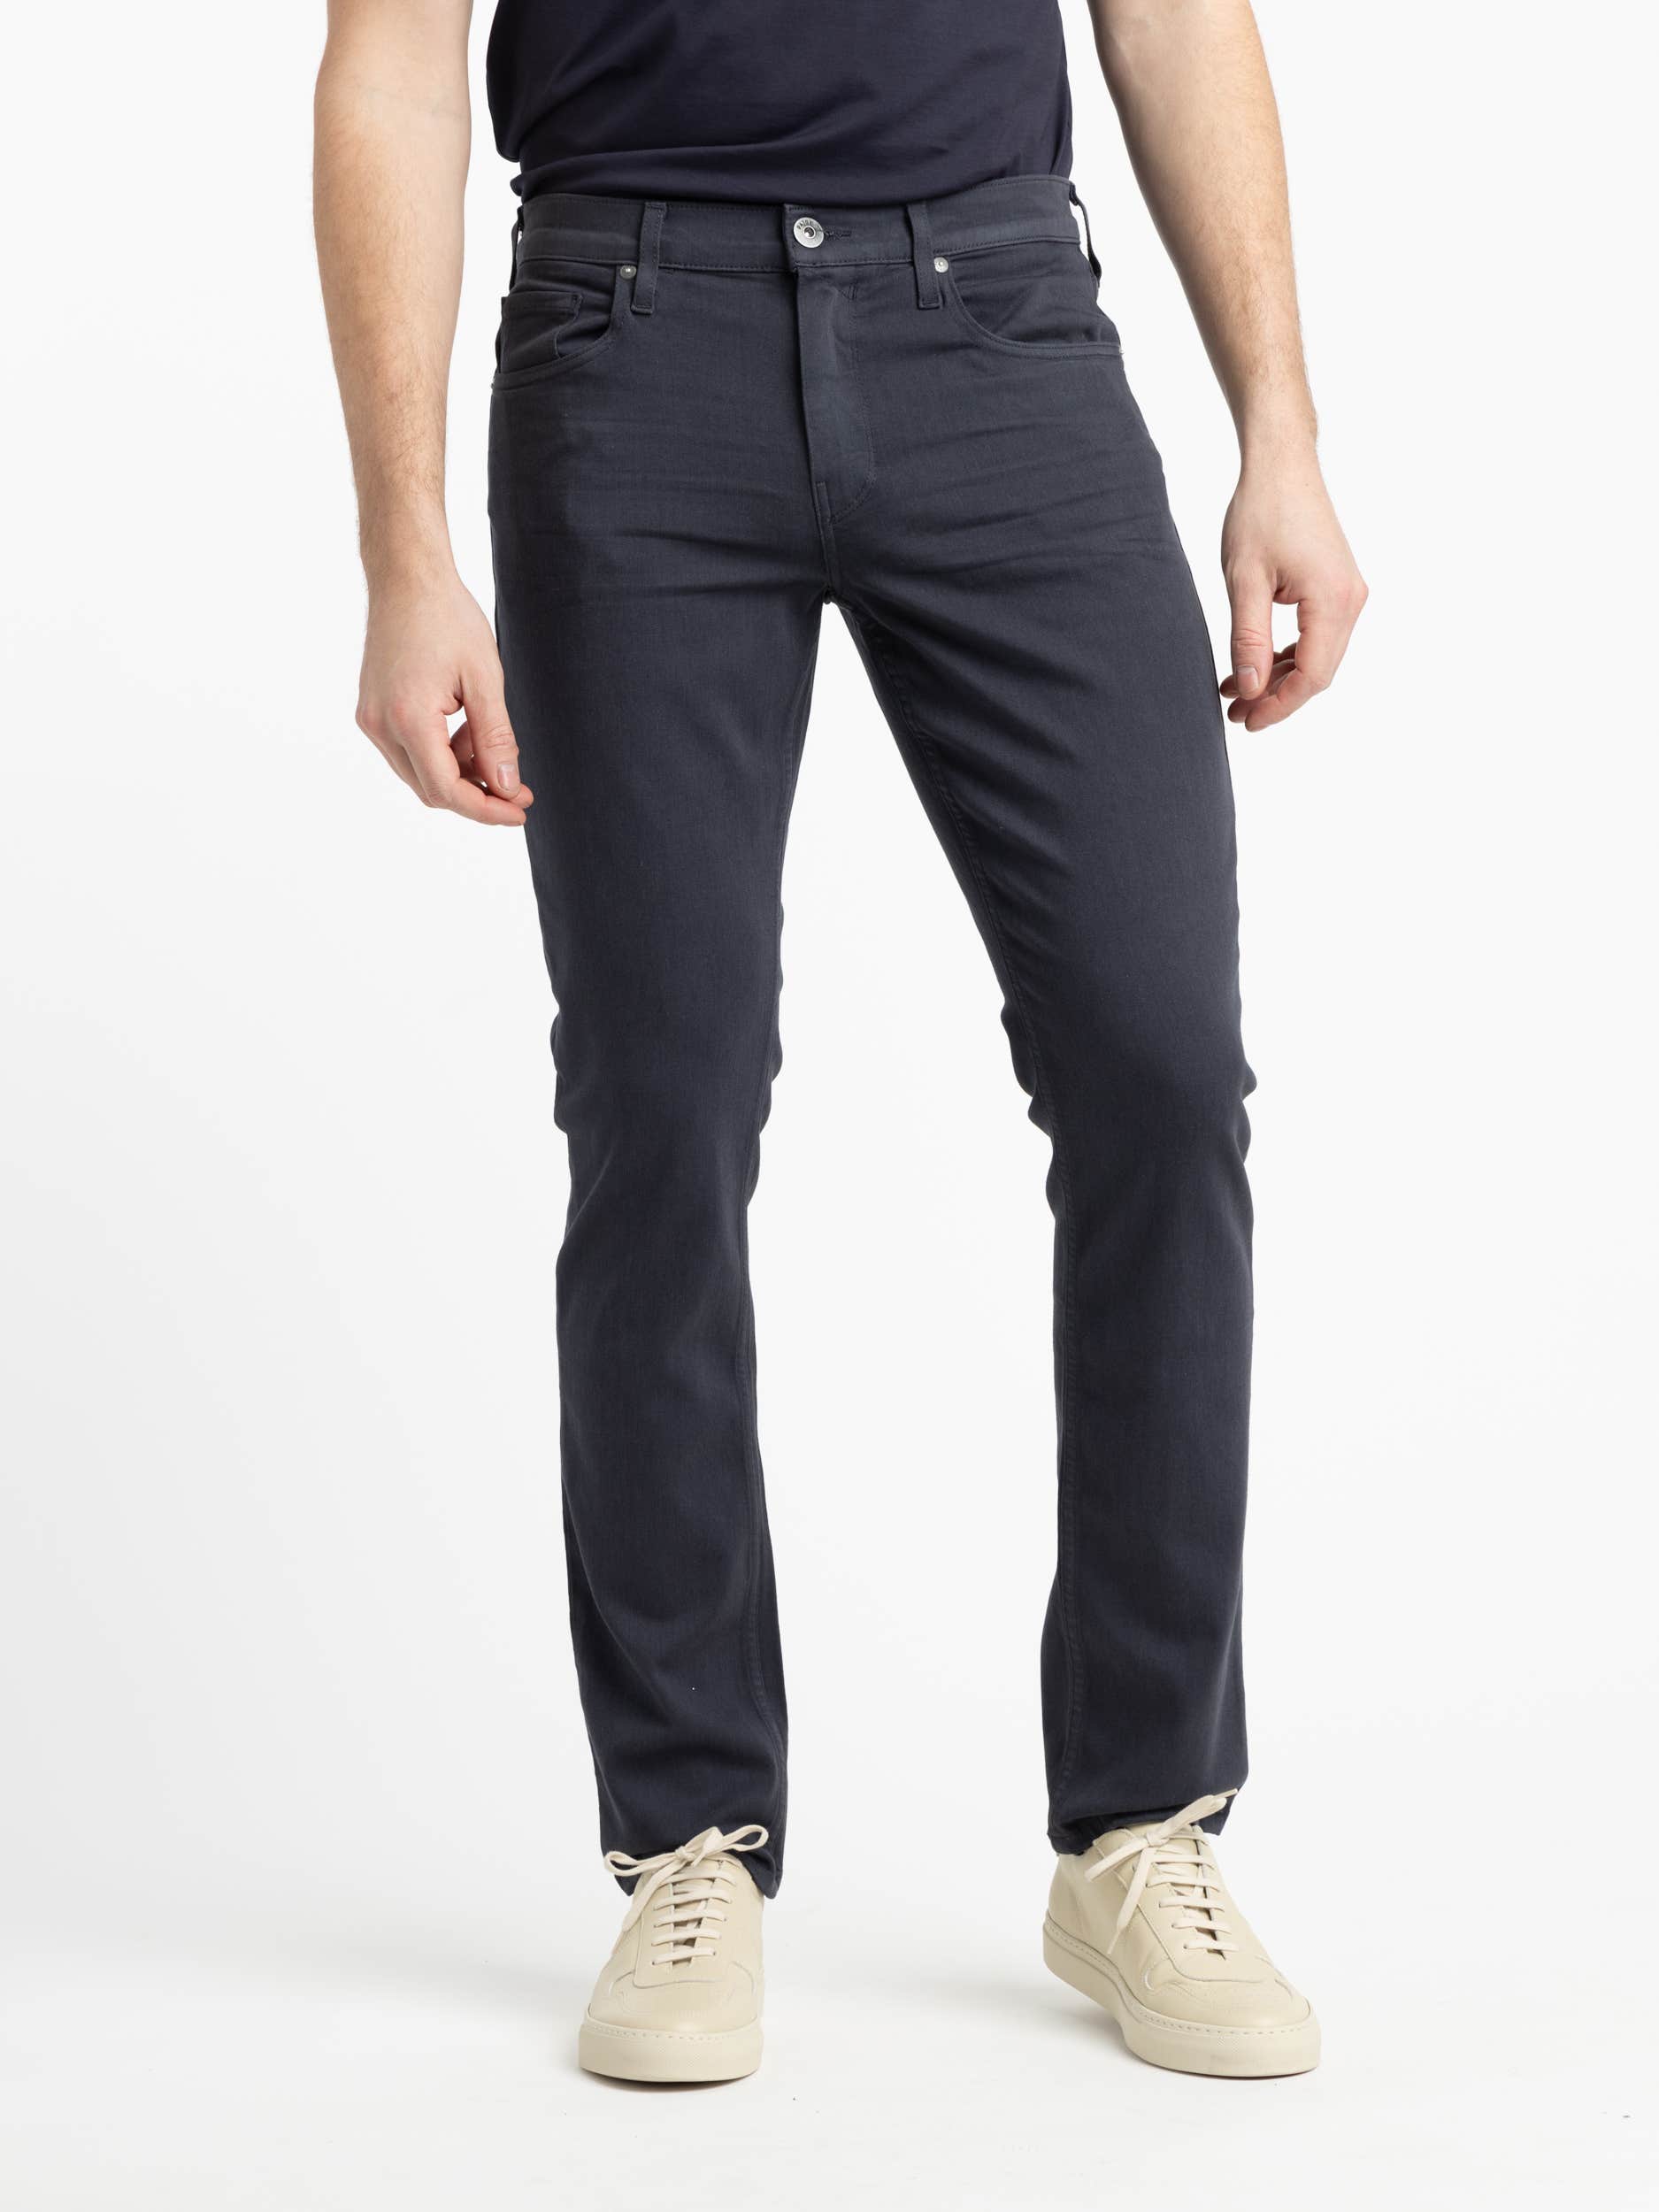 Bluemoon Bay Lennox Slim Jeans